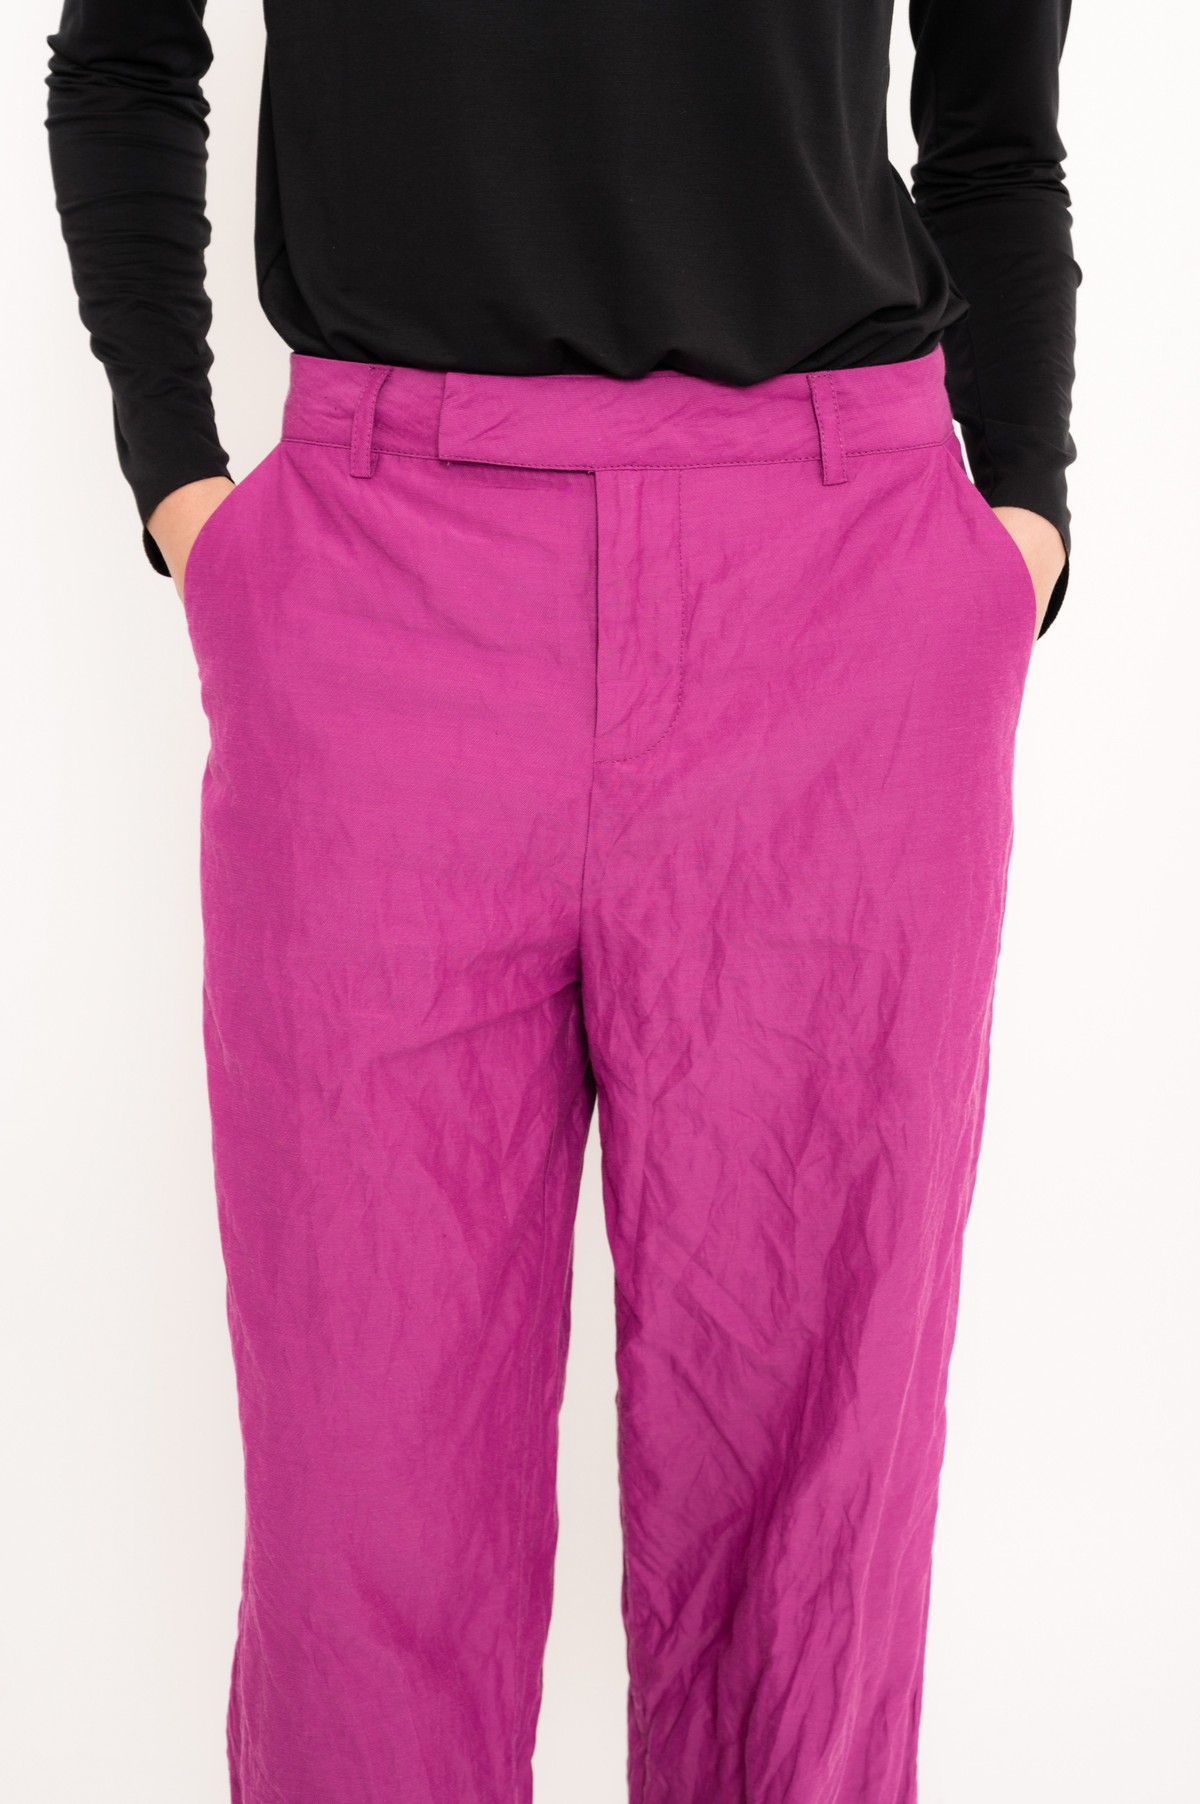 calça pantalona em tecido amassado | crinkled wide pants